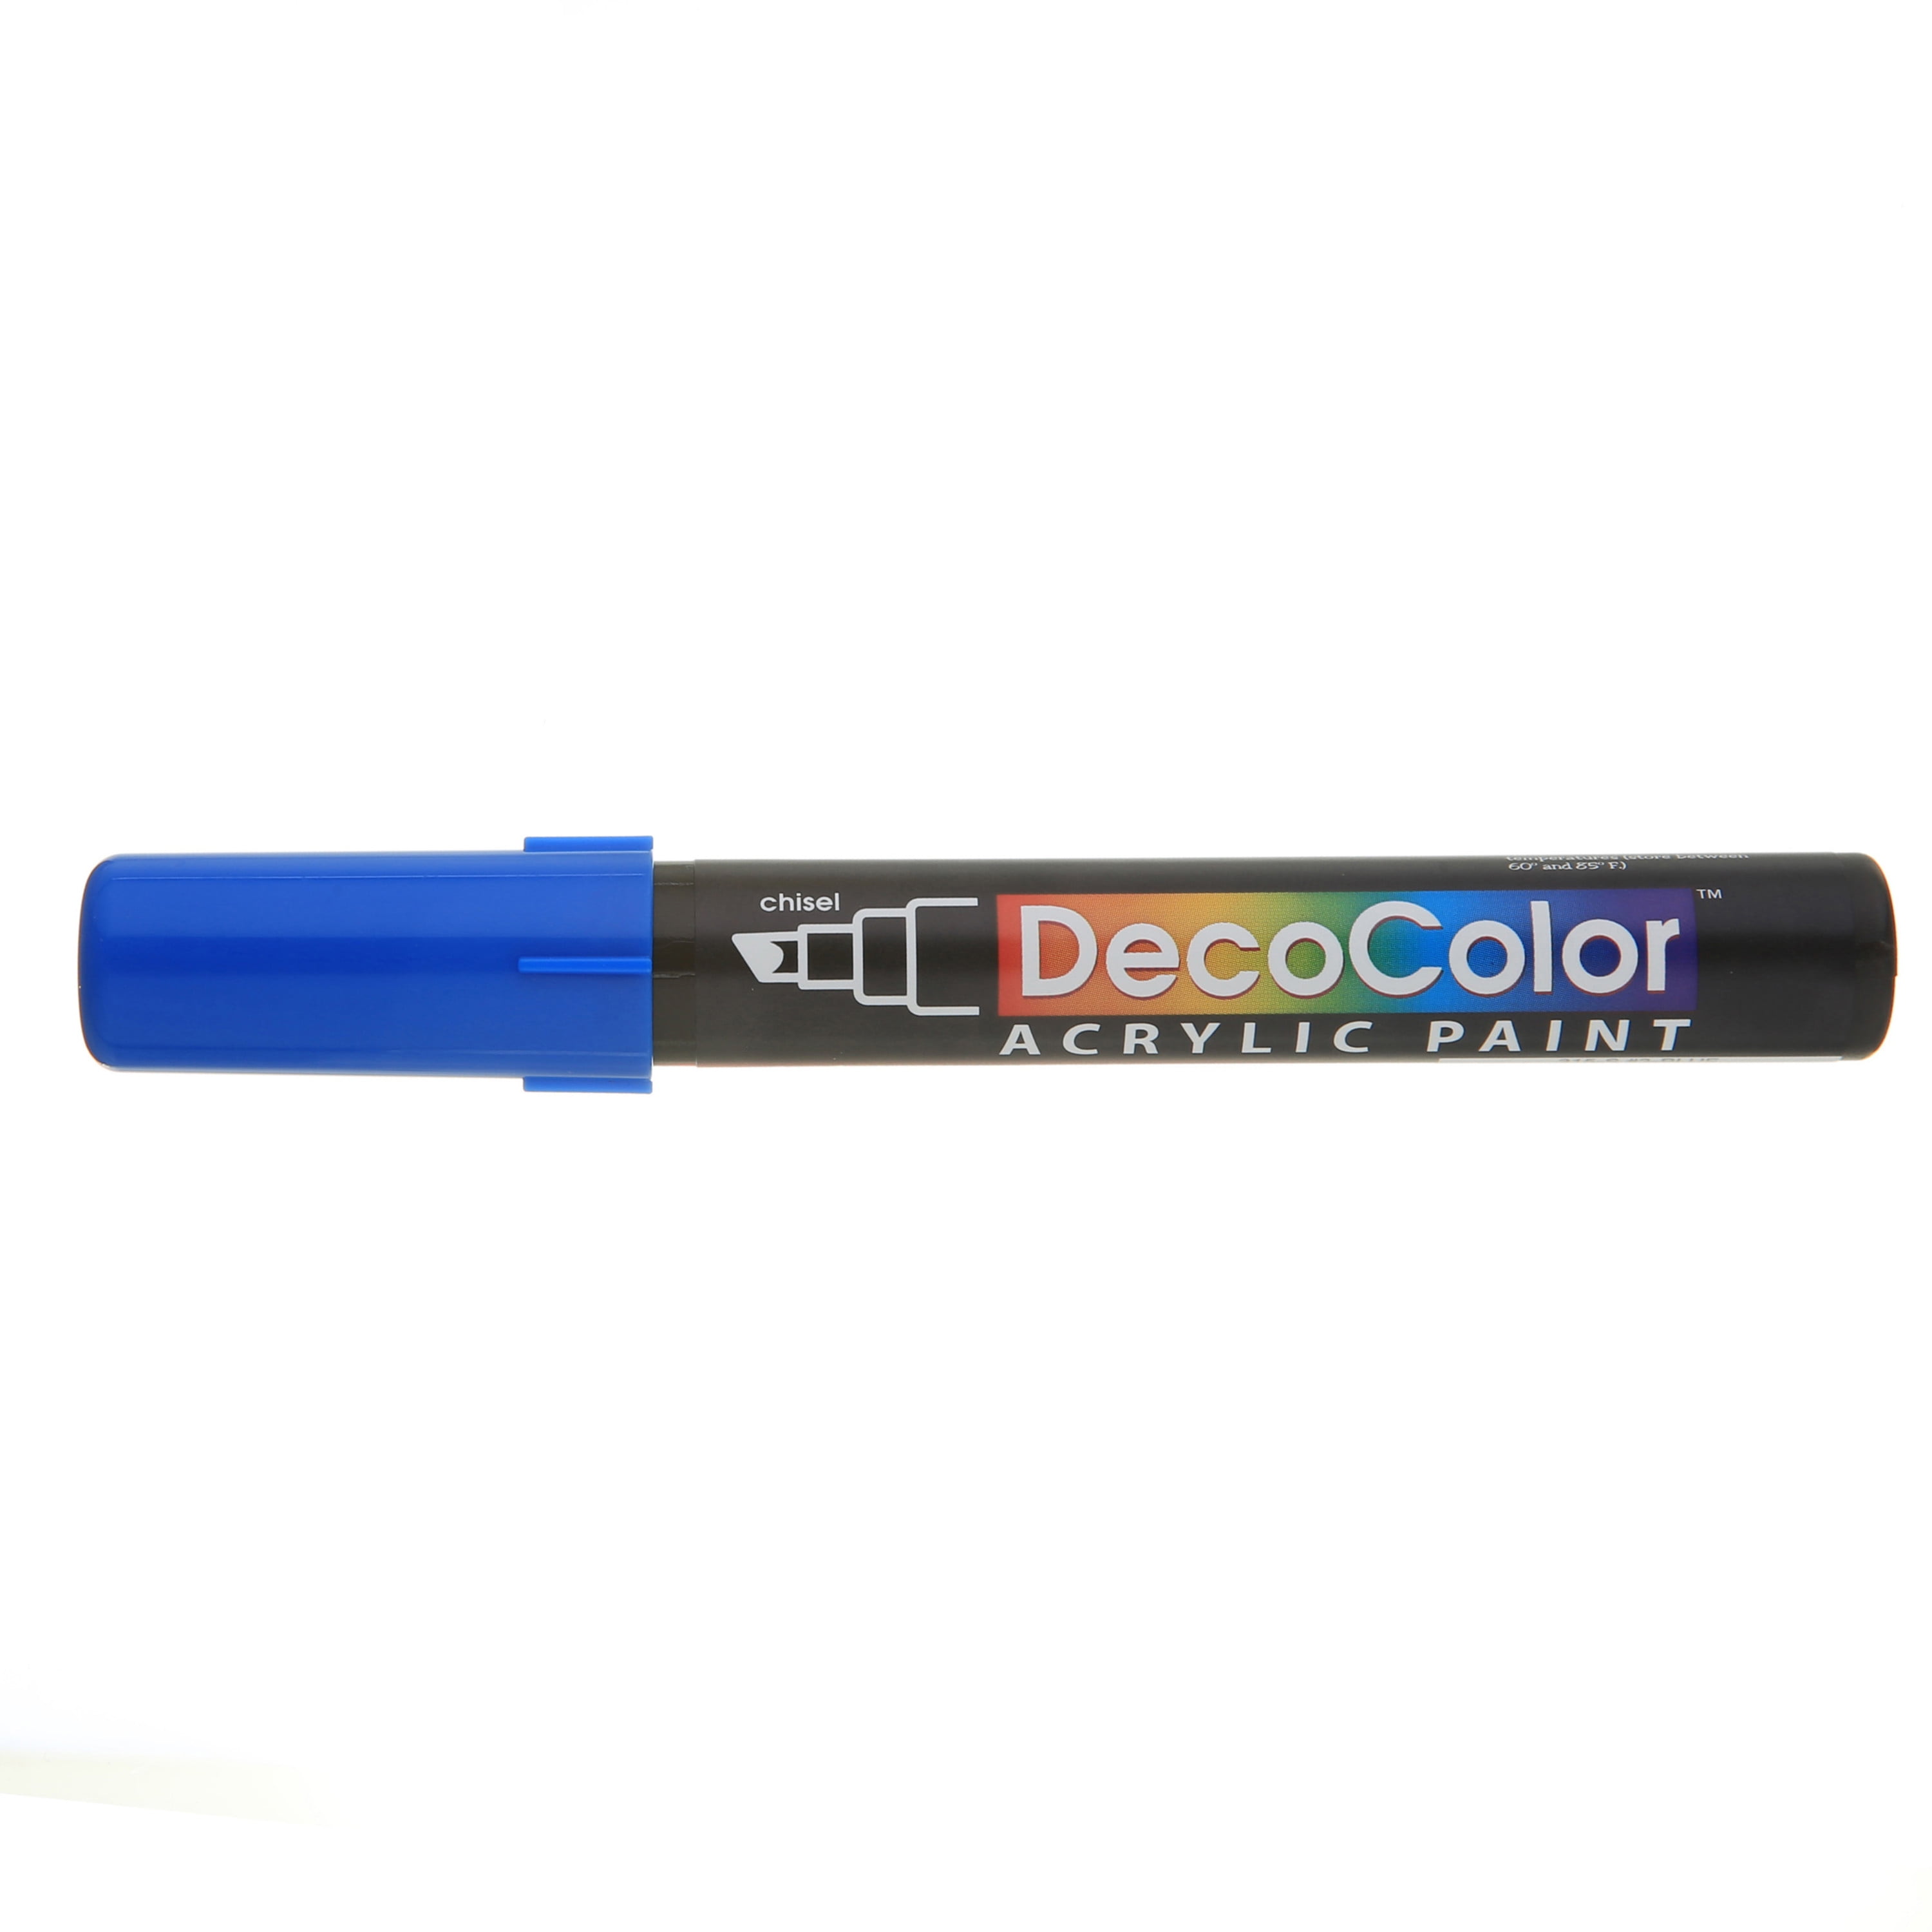 PINTAR Metallic Markers Paint - Metallic Paint Pens Fine Point - Fine Tip  Paint Pens - Acrylic Markers Paint Pens - Acrylic Paint Pens for Rock